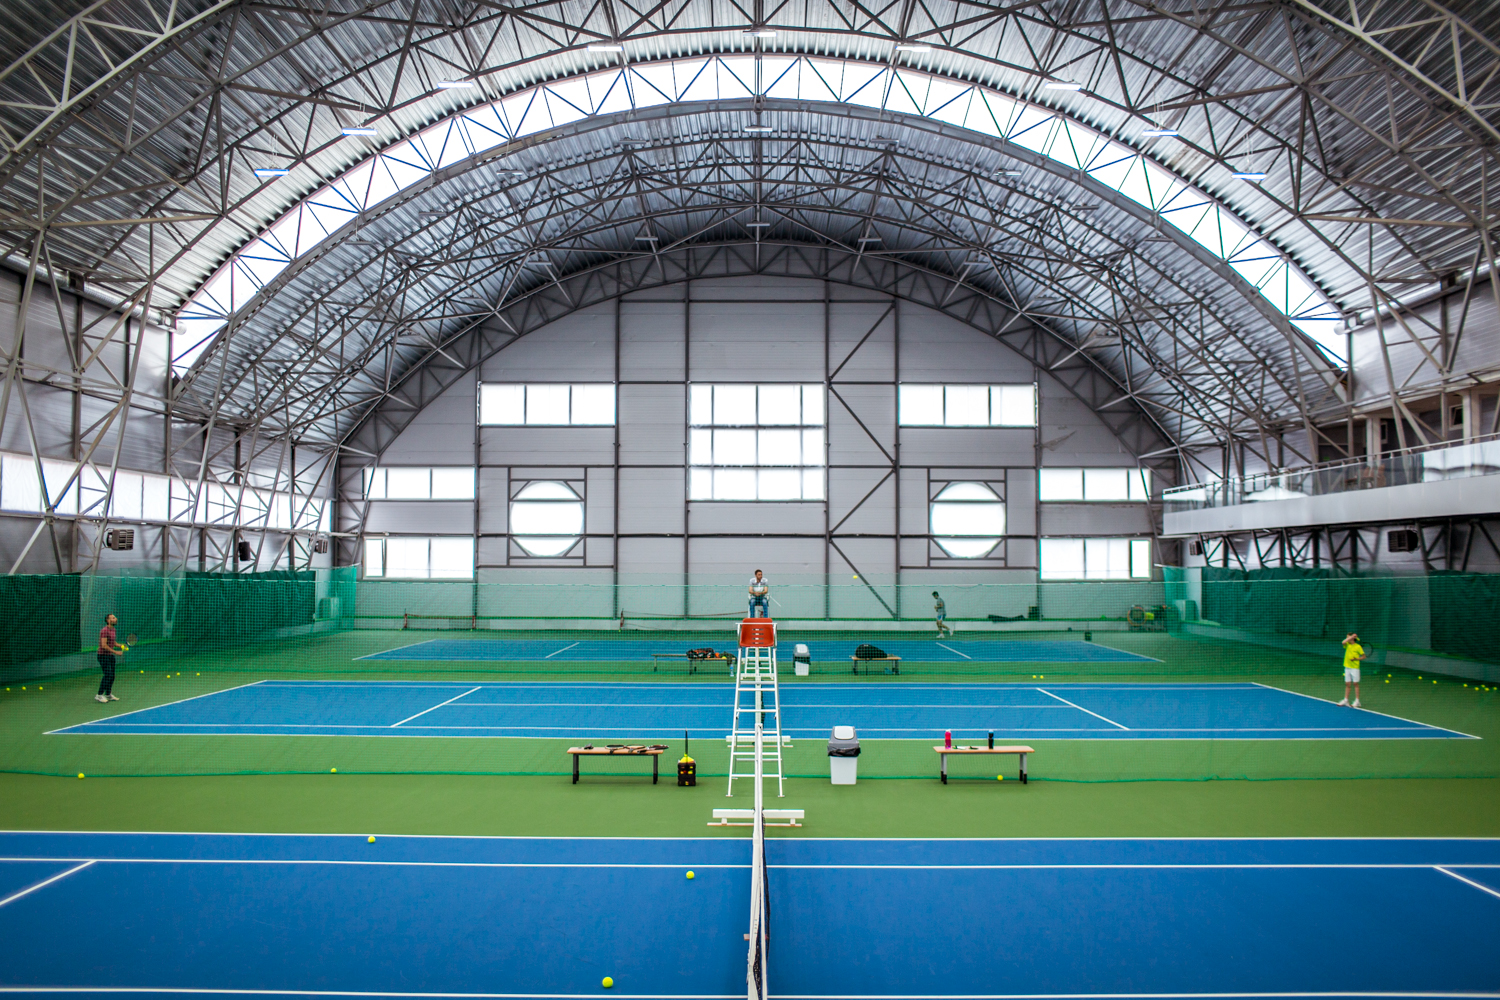 Tennis centre